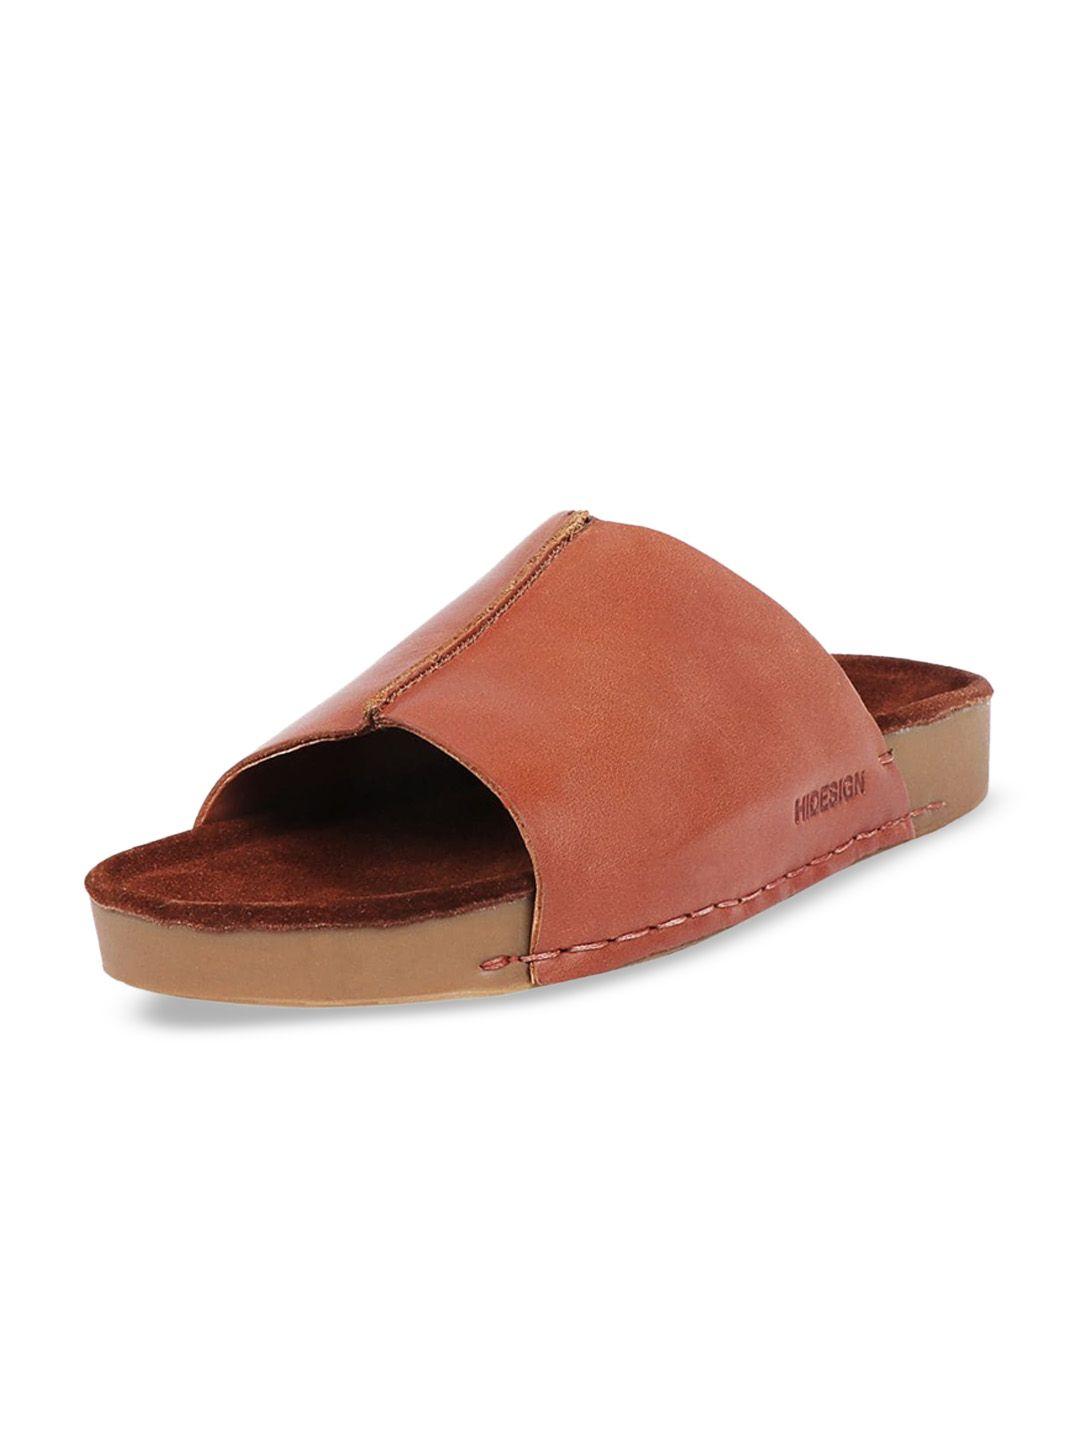 hidesign cancun open toe leather mules